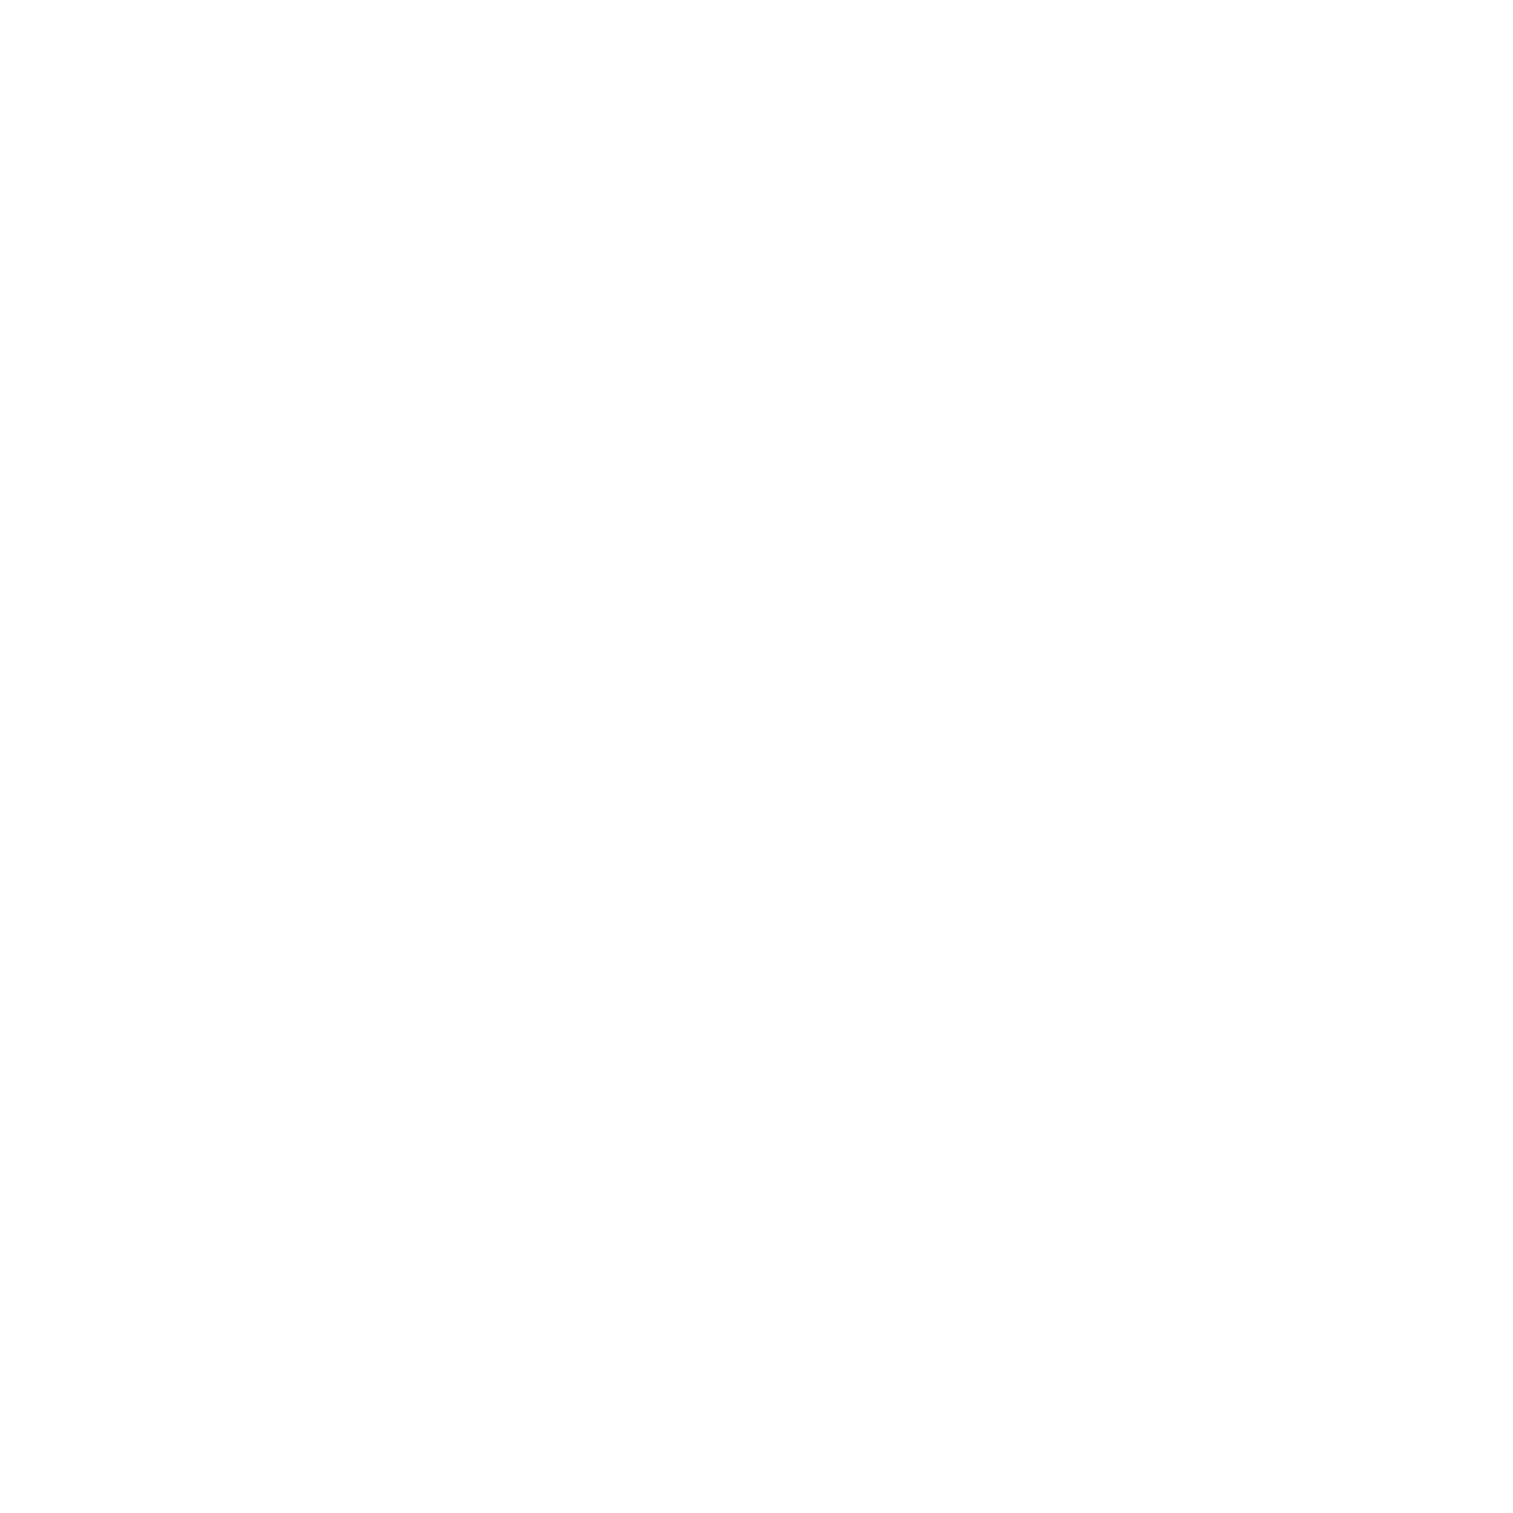 3dxlive